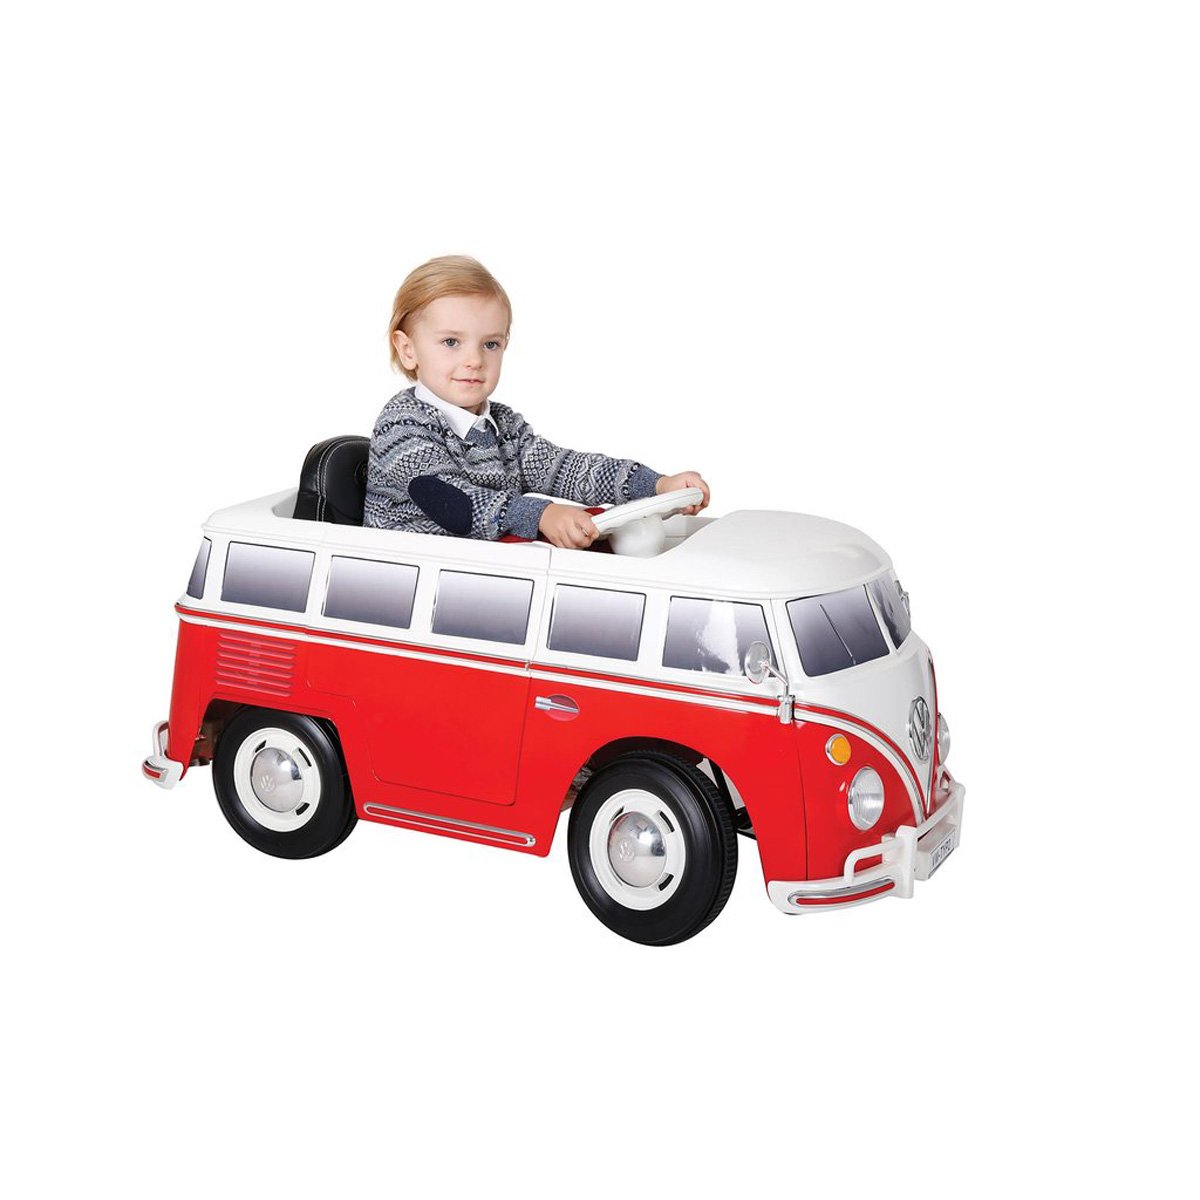 Montable Vw Minibus Red Prinsel